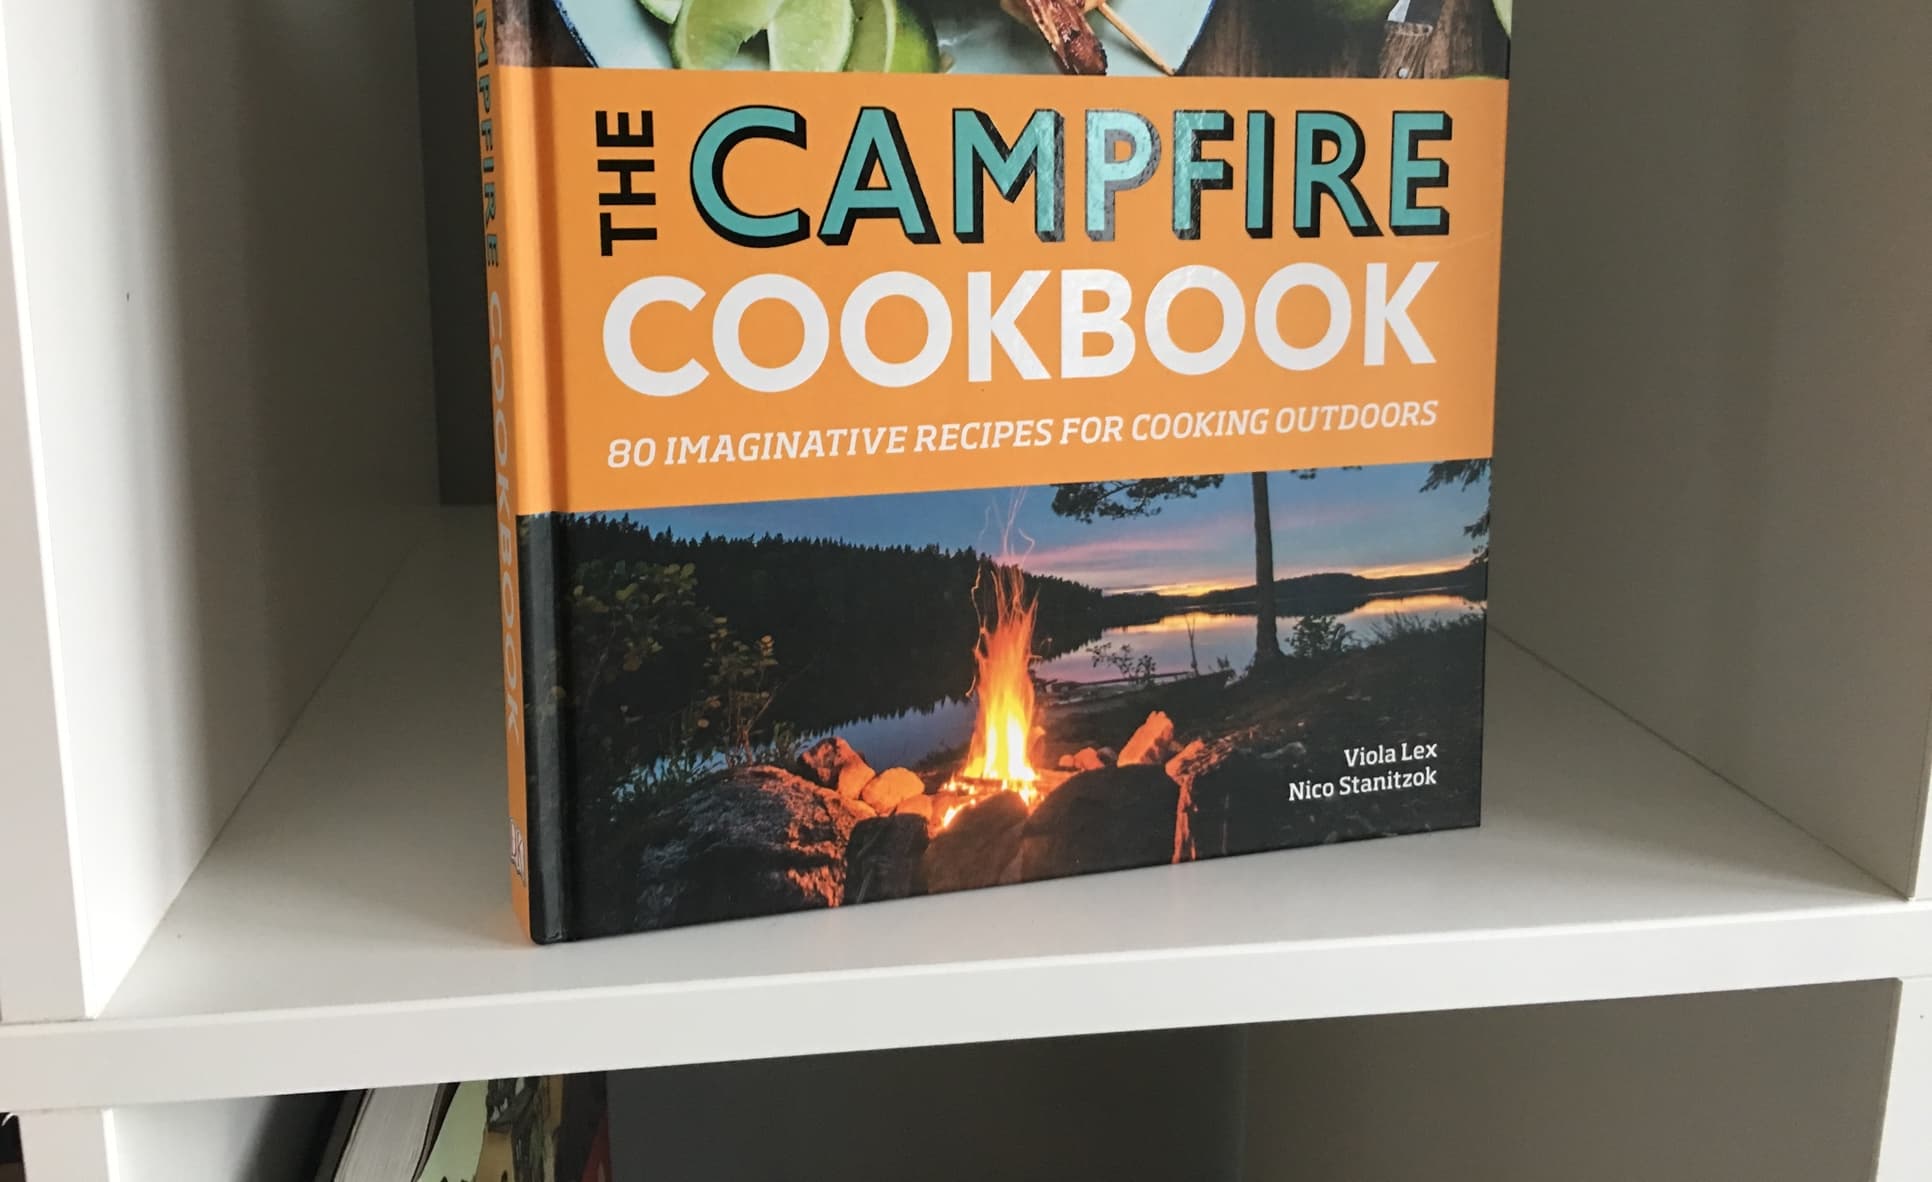 Camper kochbuch - Der absolute TOP-Favorit unserer Redaktion